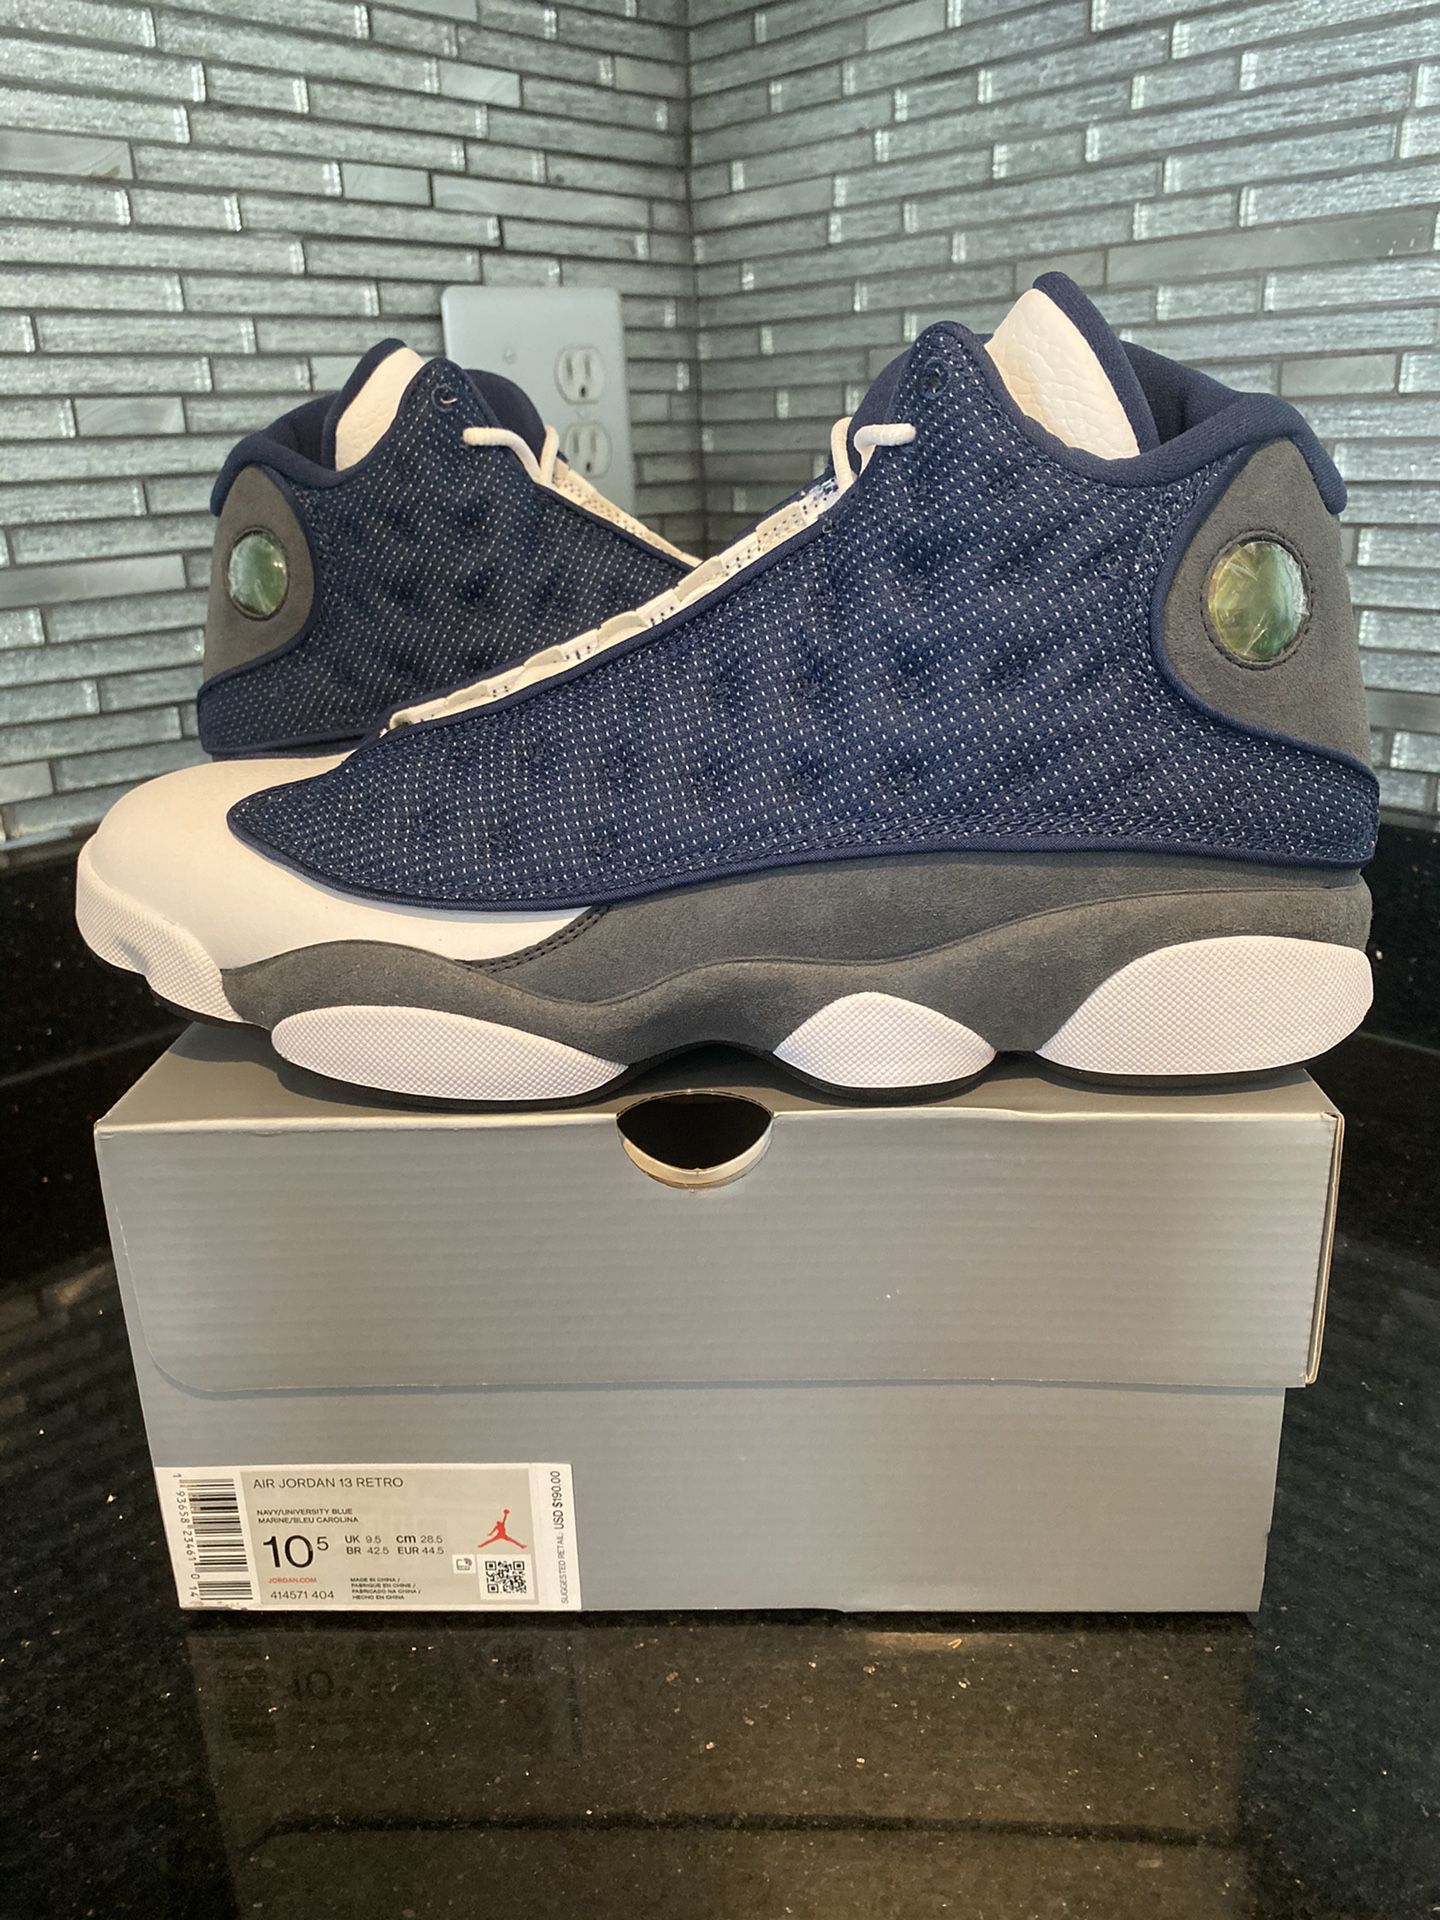 Nike Jordan Retro 13 Flint size 10.5